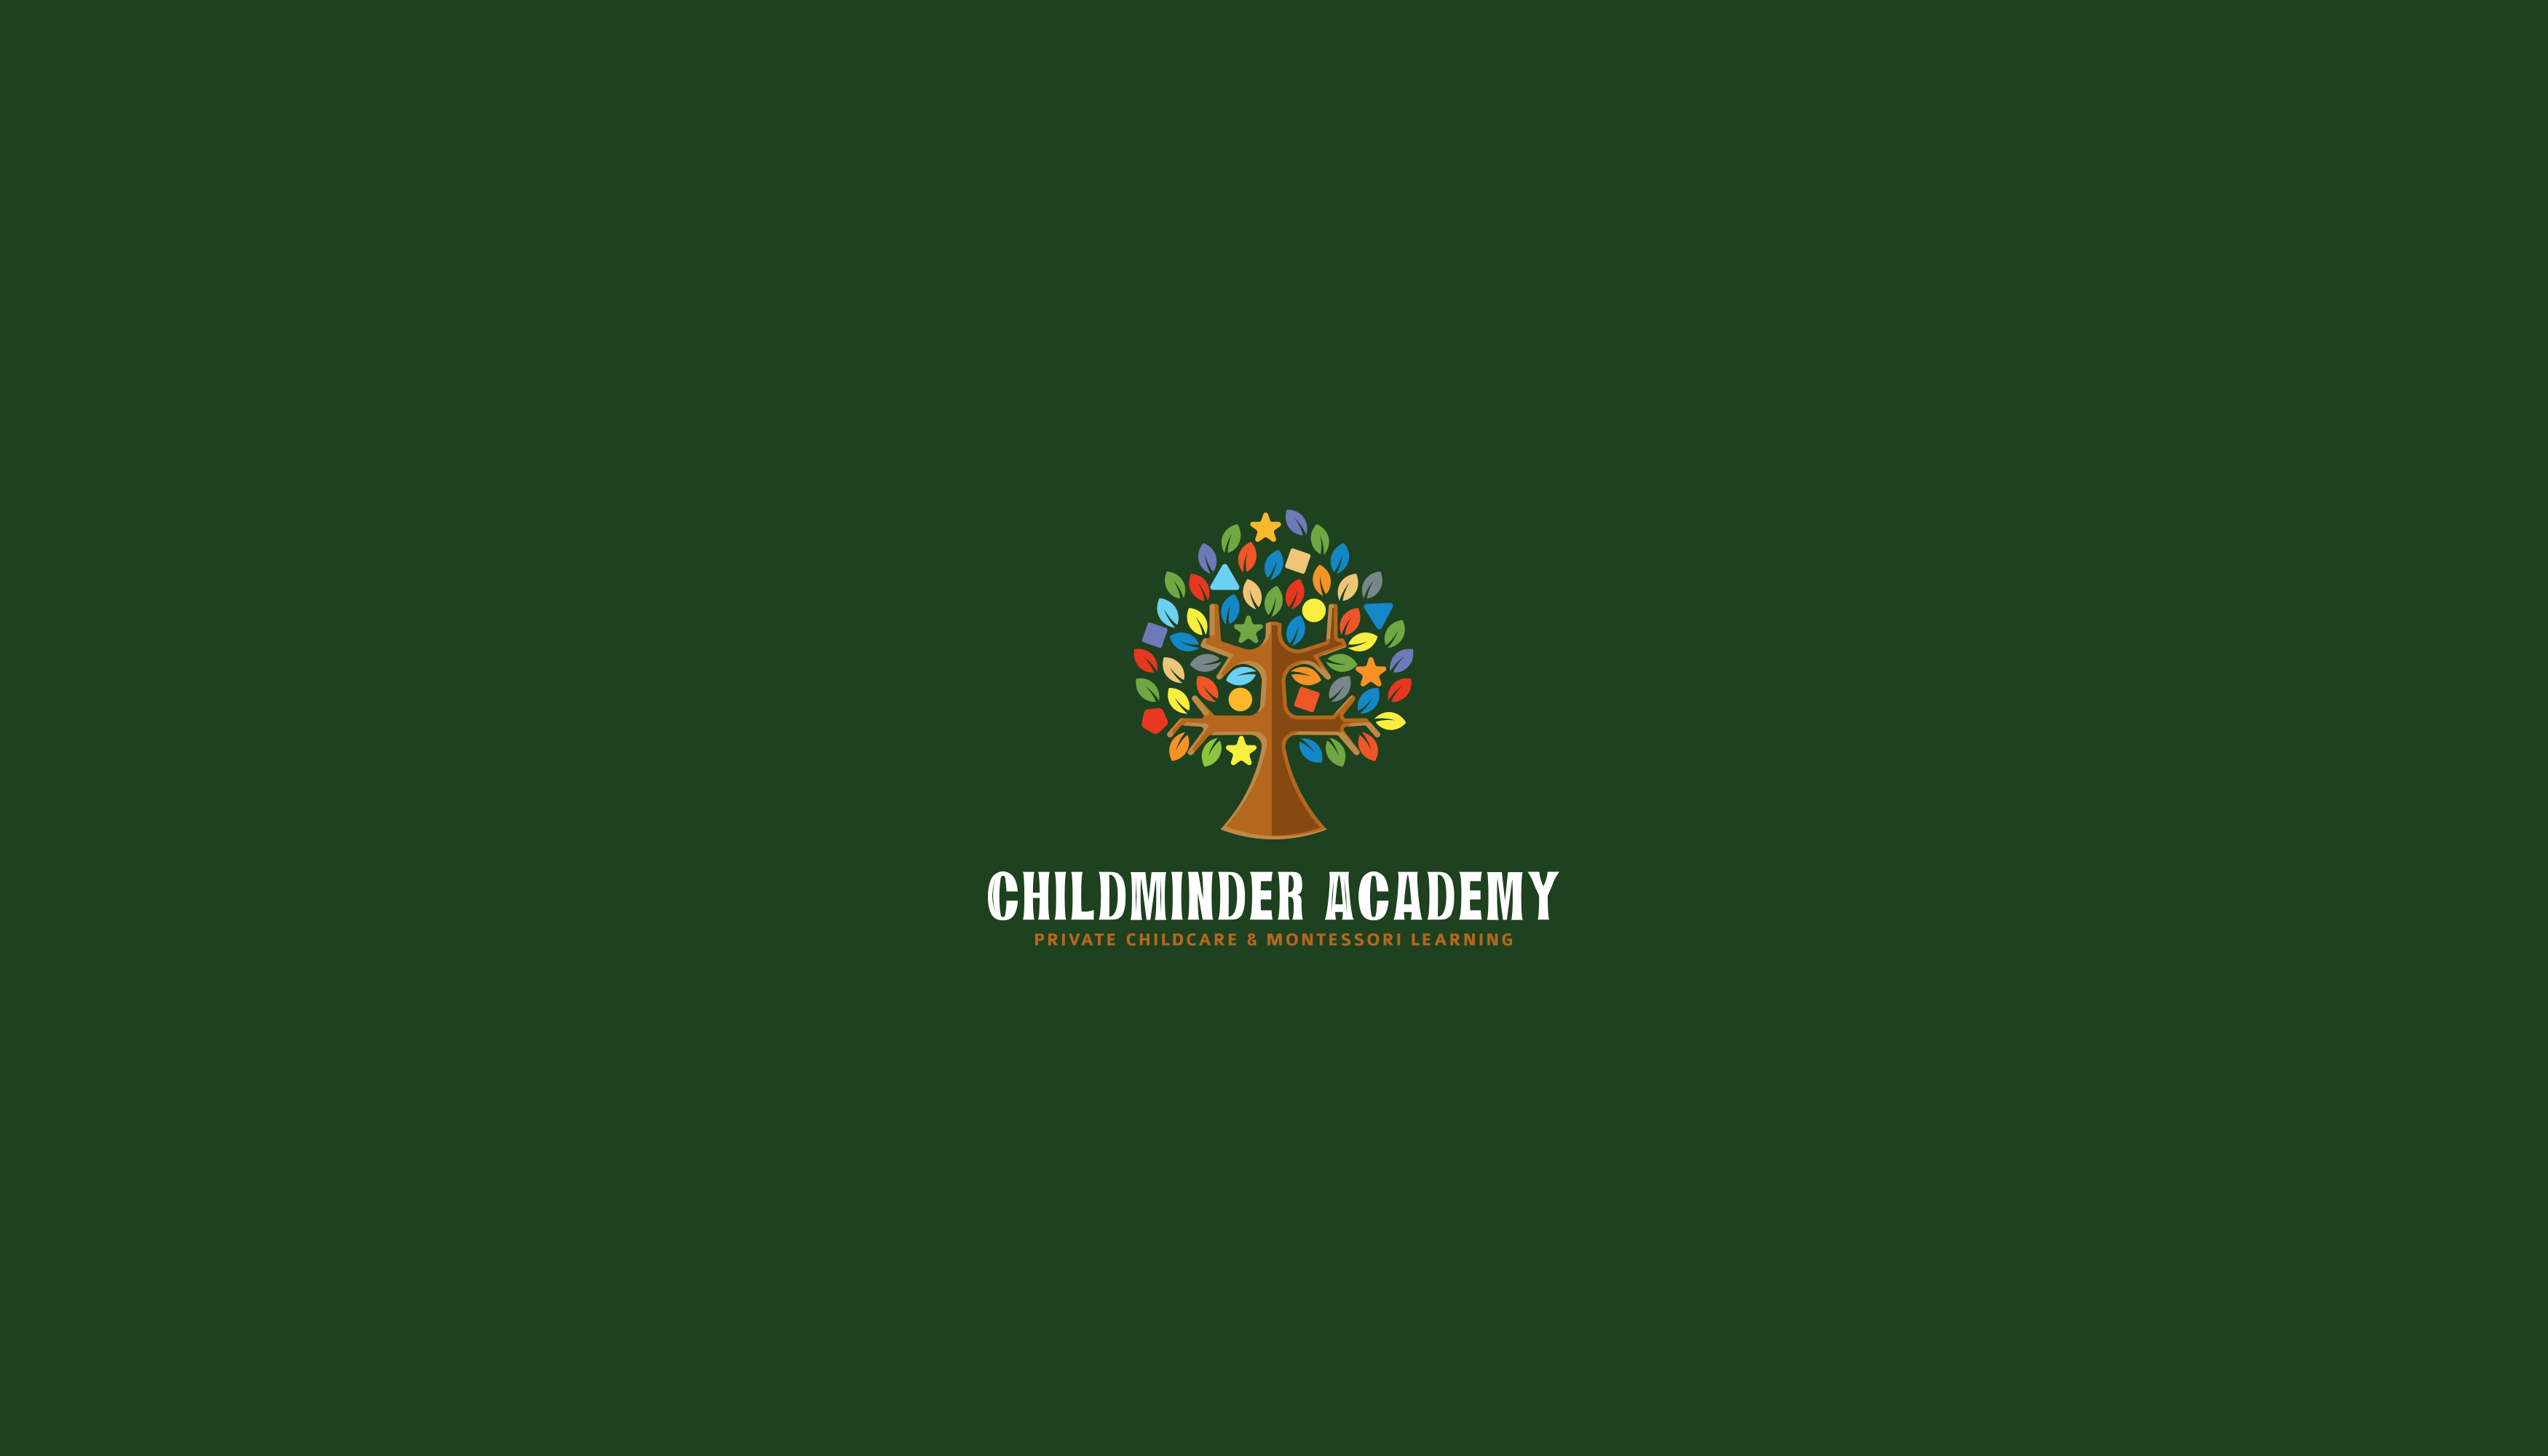 ChildMinder Academy Design #7